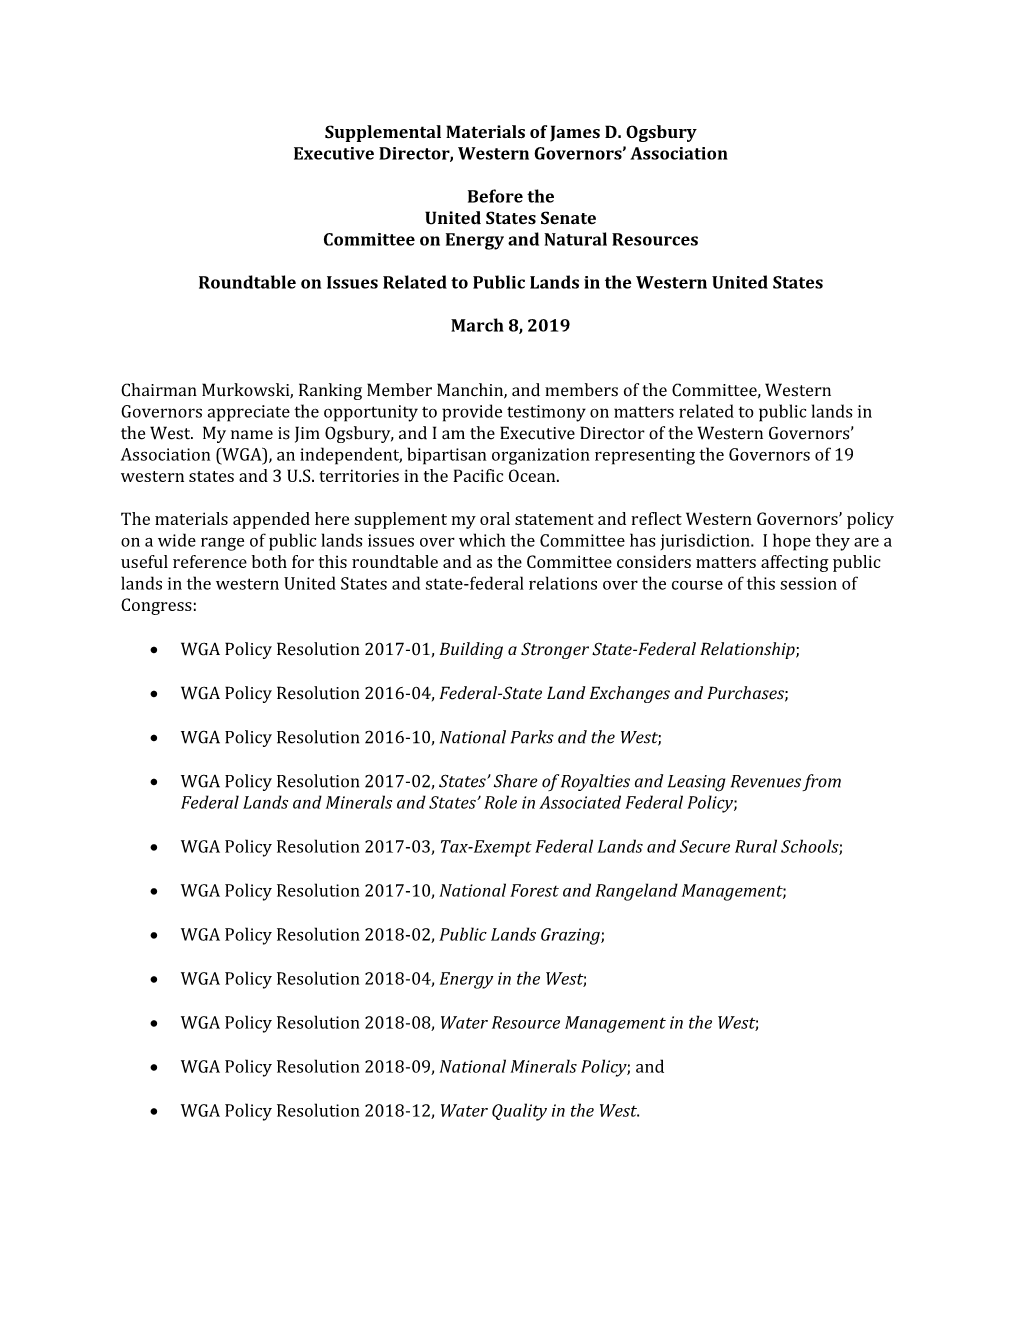 Supplemental Materials of James D. Ogsbury Executive Director, Western Governors’ Association